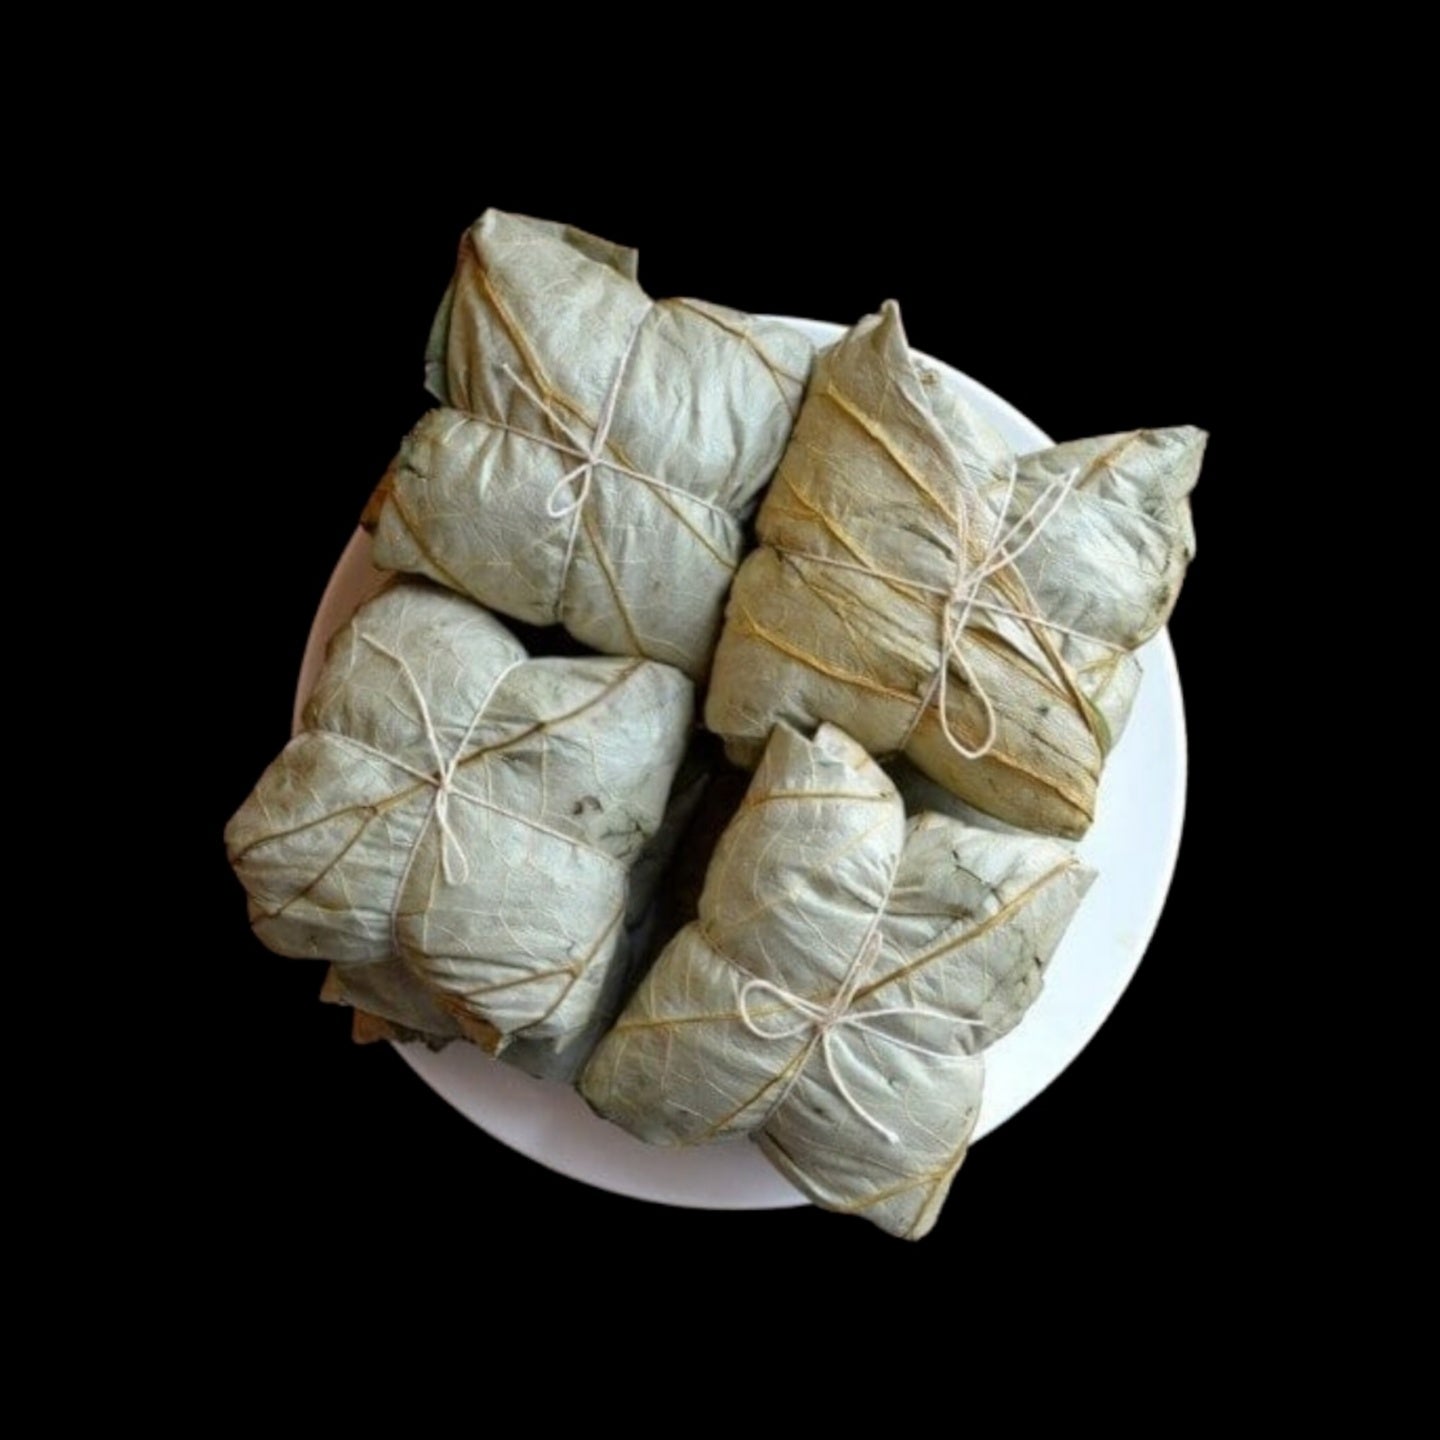 Sticky Rice Lotus Wraps 찹쌀 연잎밥 4 Pcs